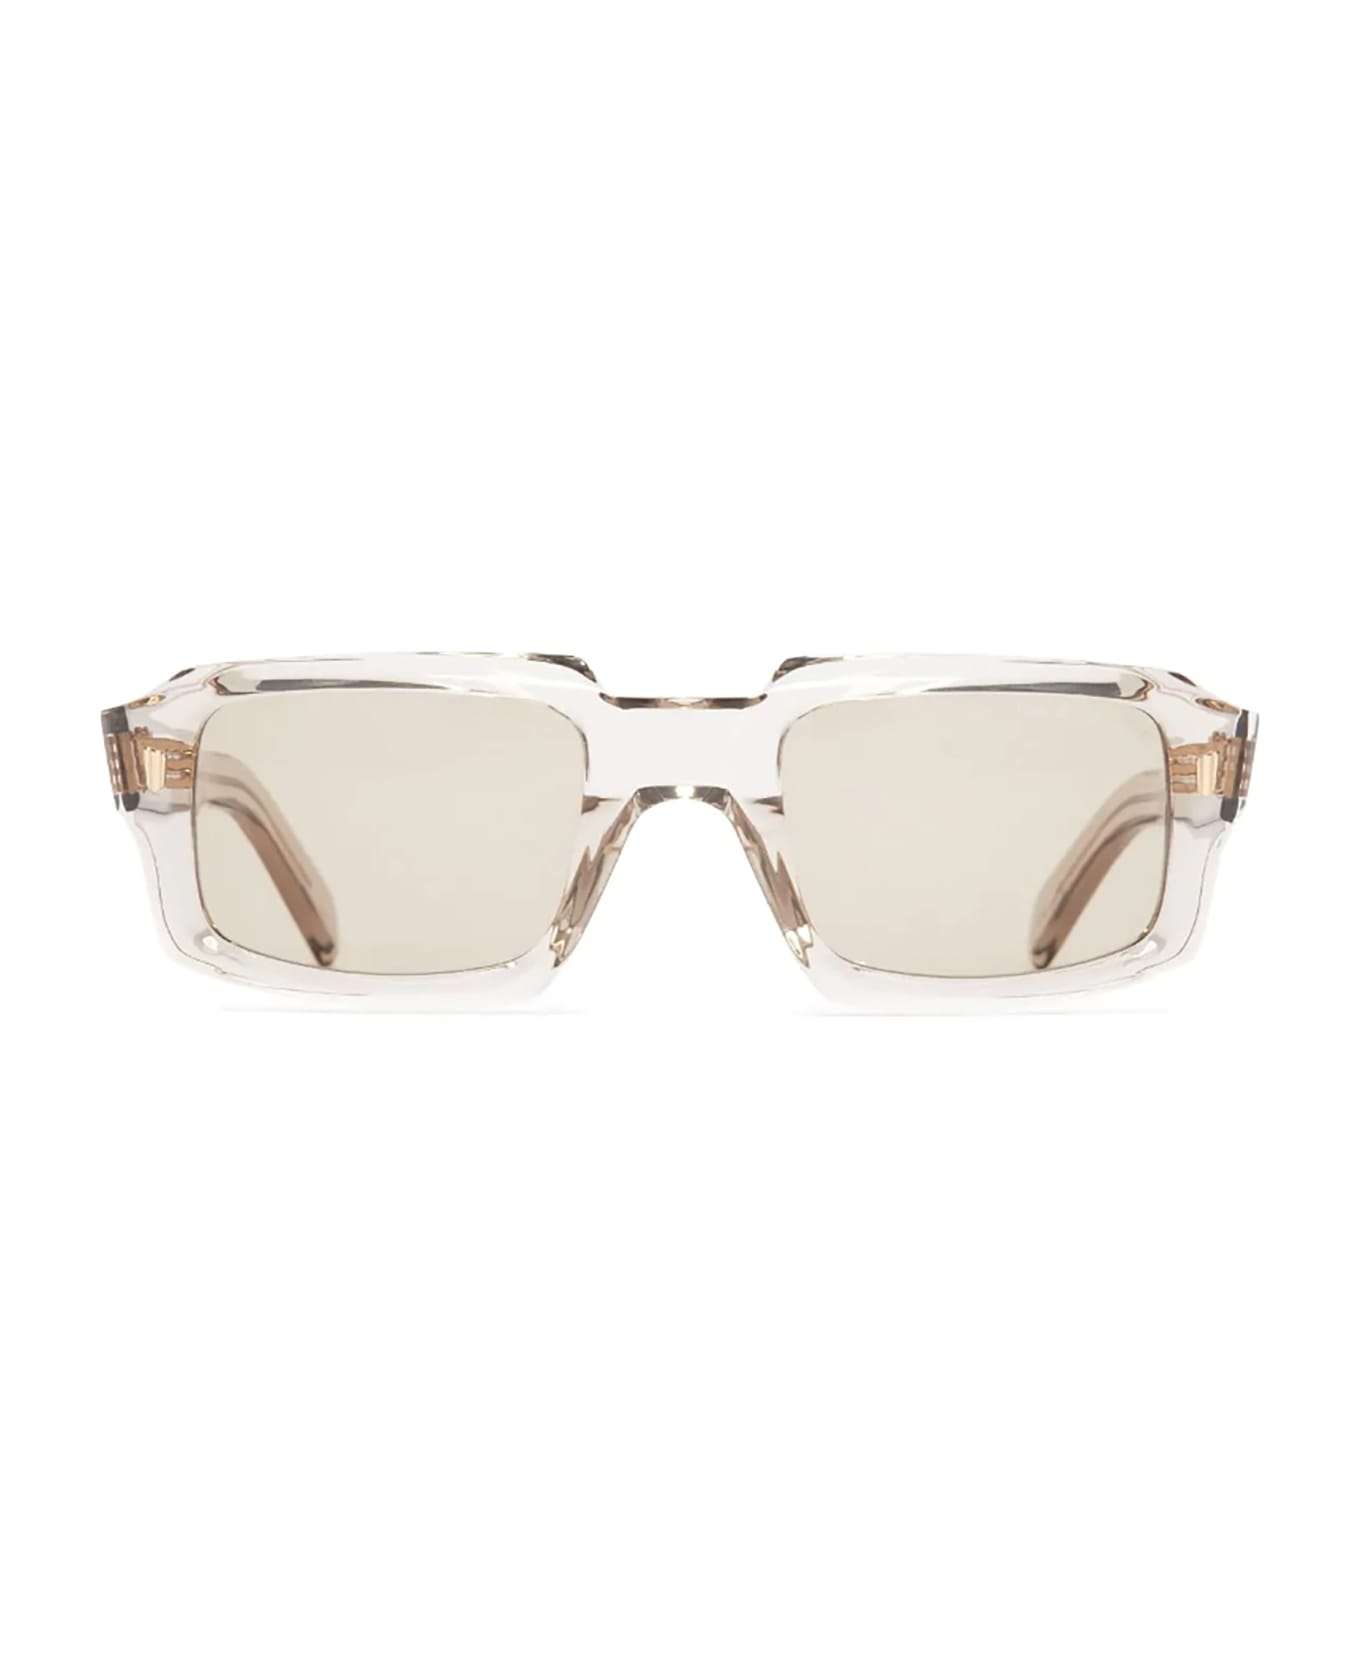 Cutler and Gross 9495 Sunglasses - Sand Crystal